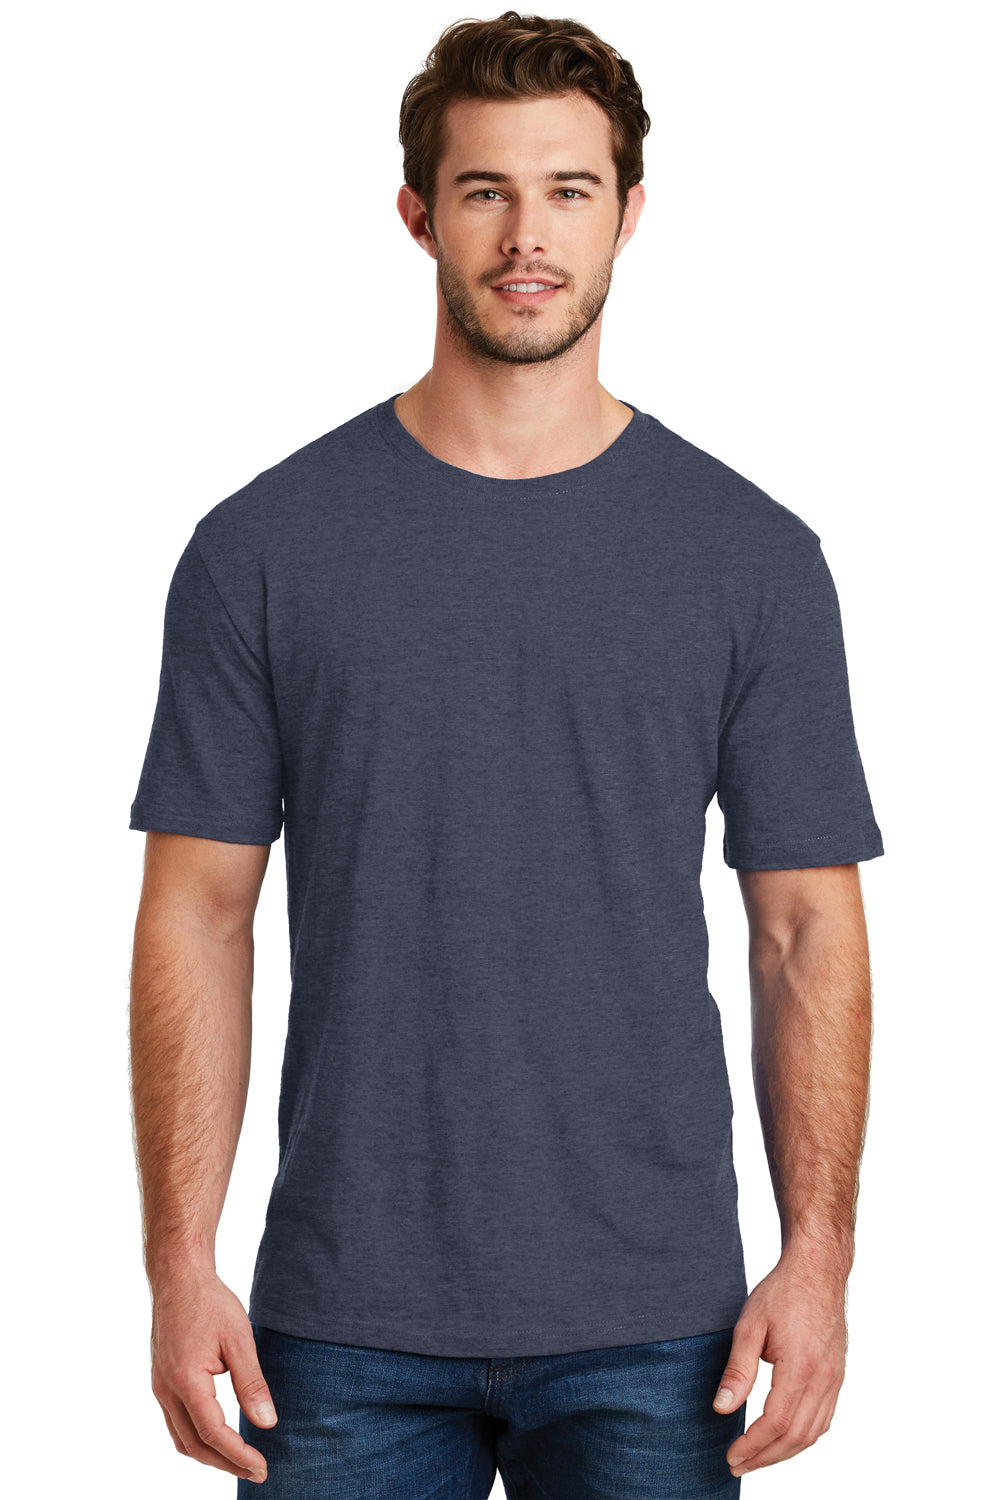 District DM108 Mens Perfect Blend Short Sleeve Crewneck T-Shirt Heather Navy Blue Front